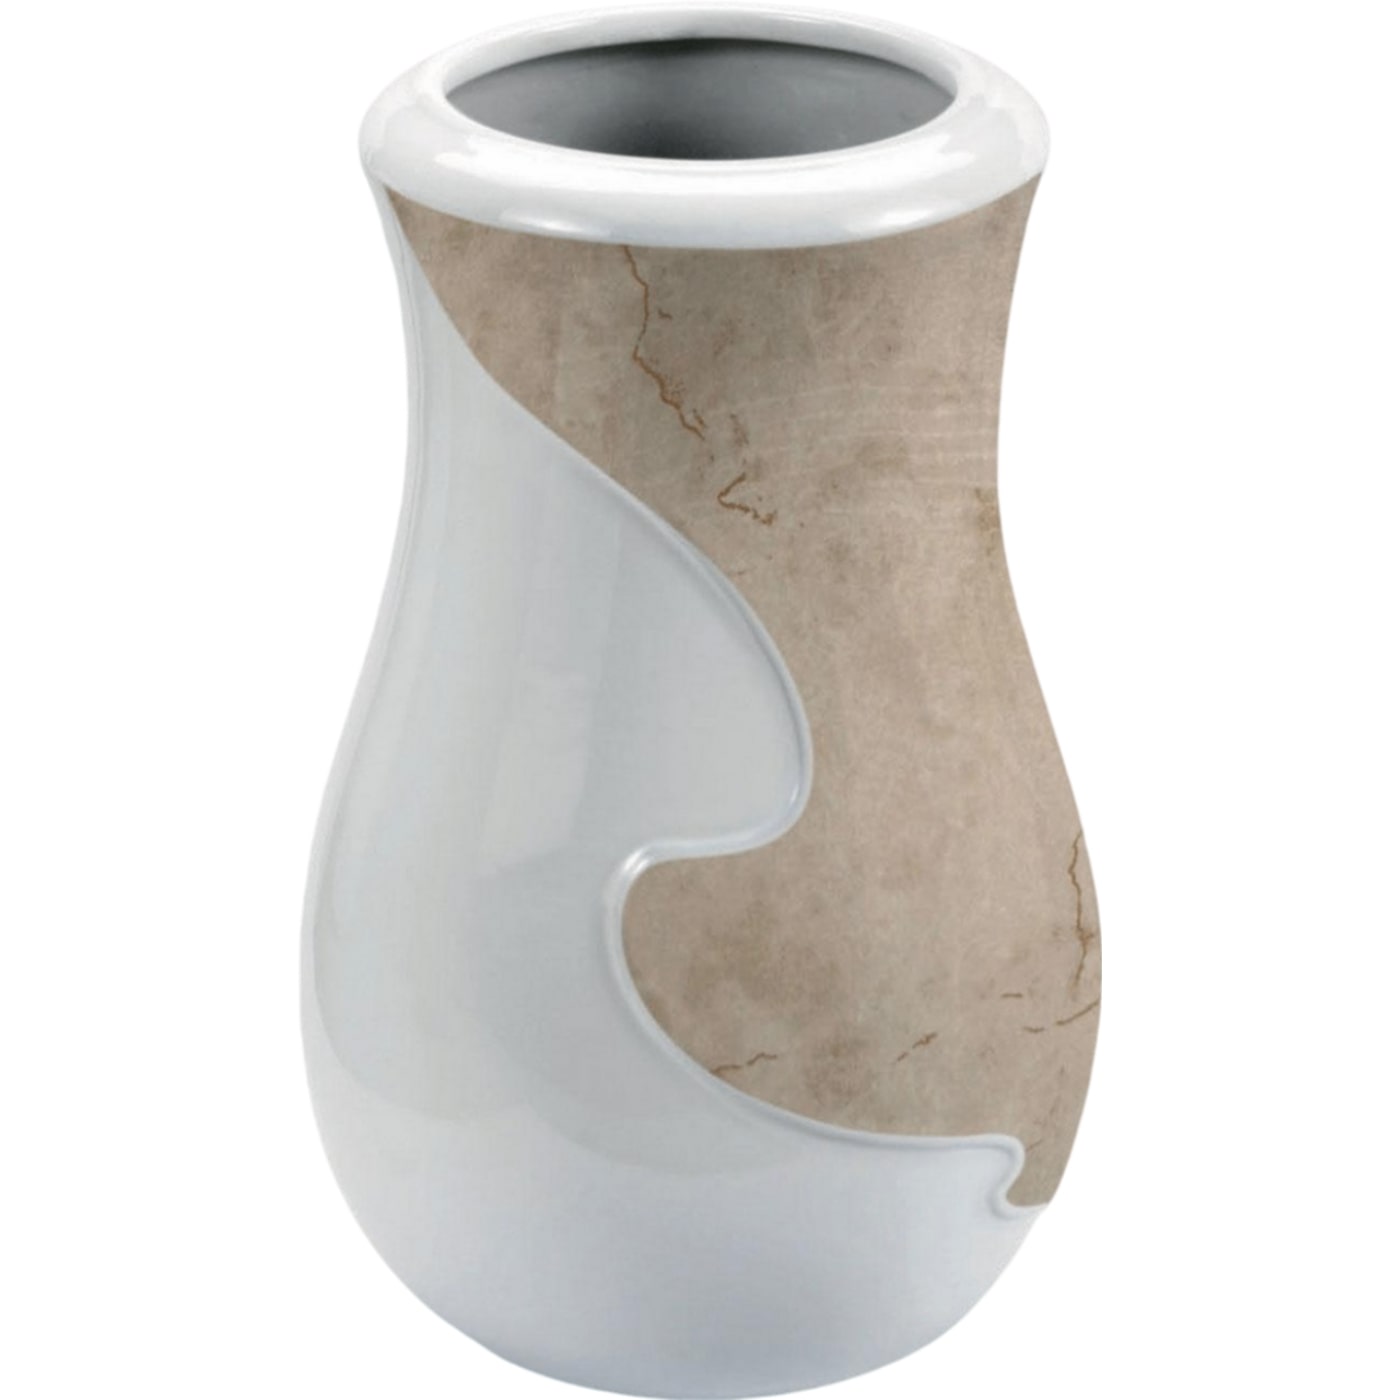 Grave vase Anna botticino 21x13cm - 8.3x5.1in In white porcelain with botticino decoration, ground attached ANN134T/BOTT